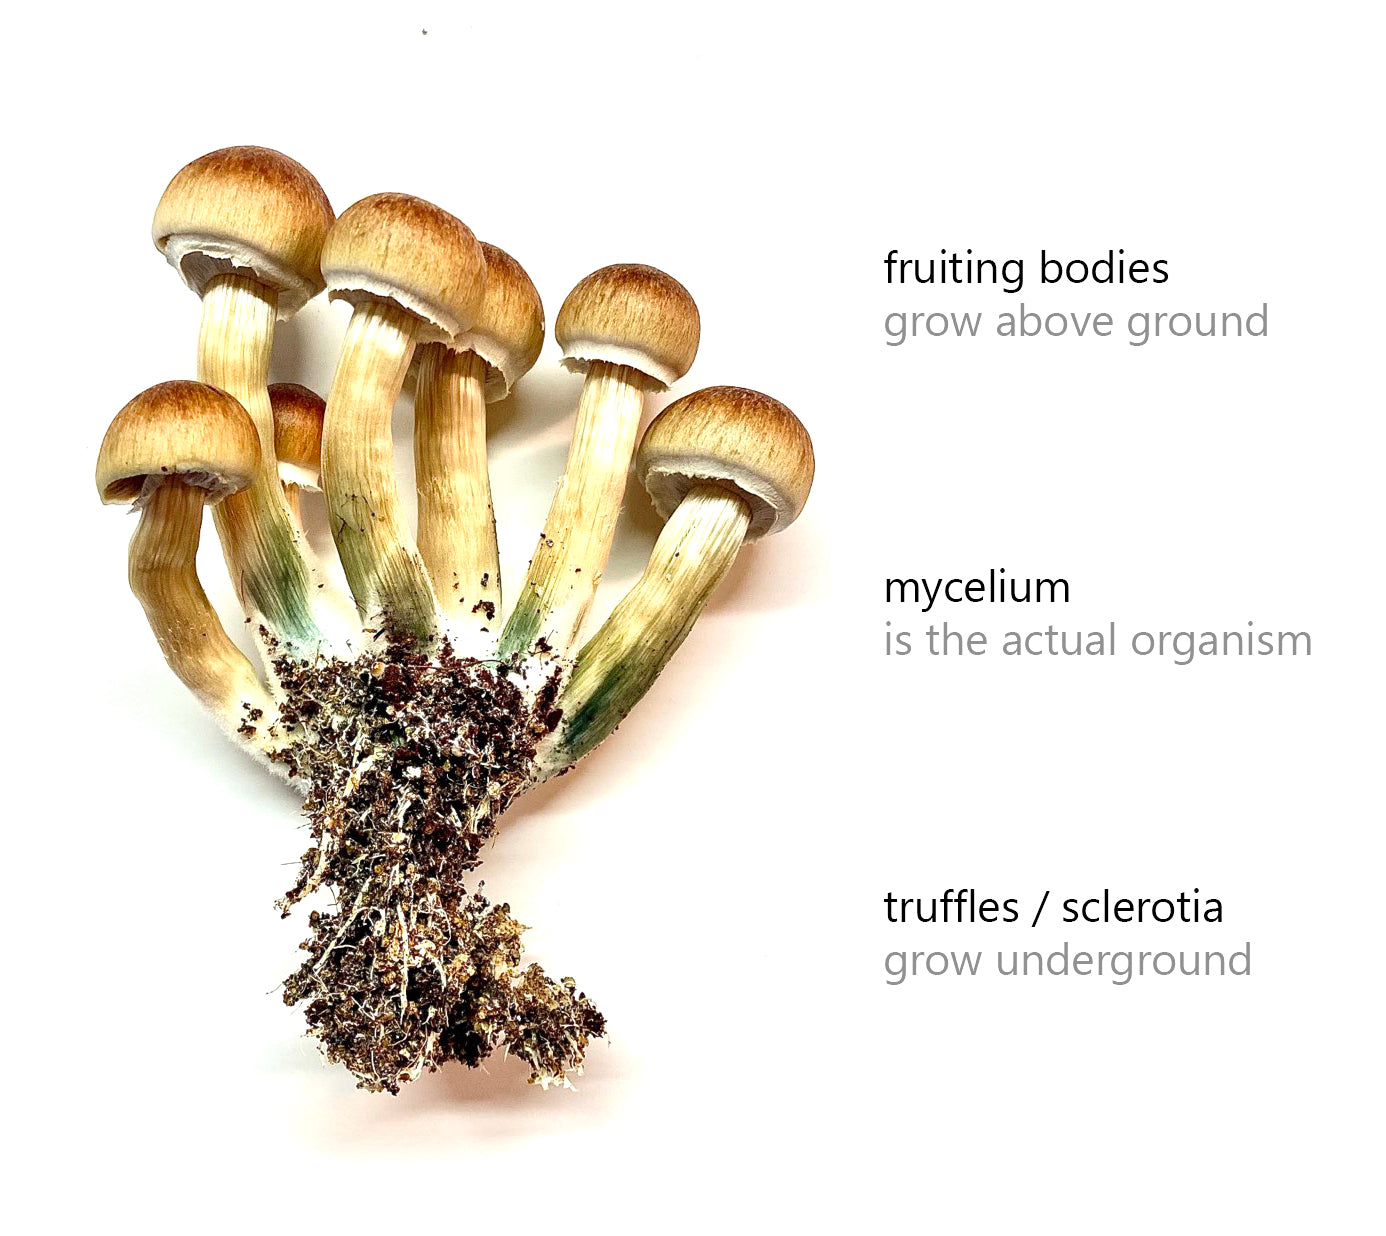 Magic Mushroom grow guide for beginners